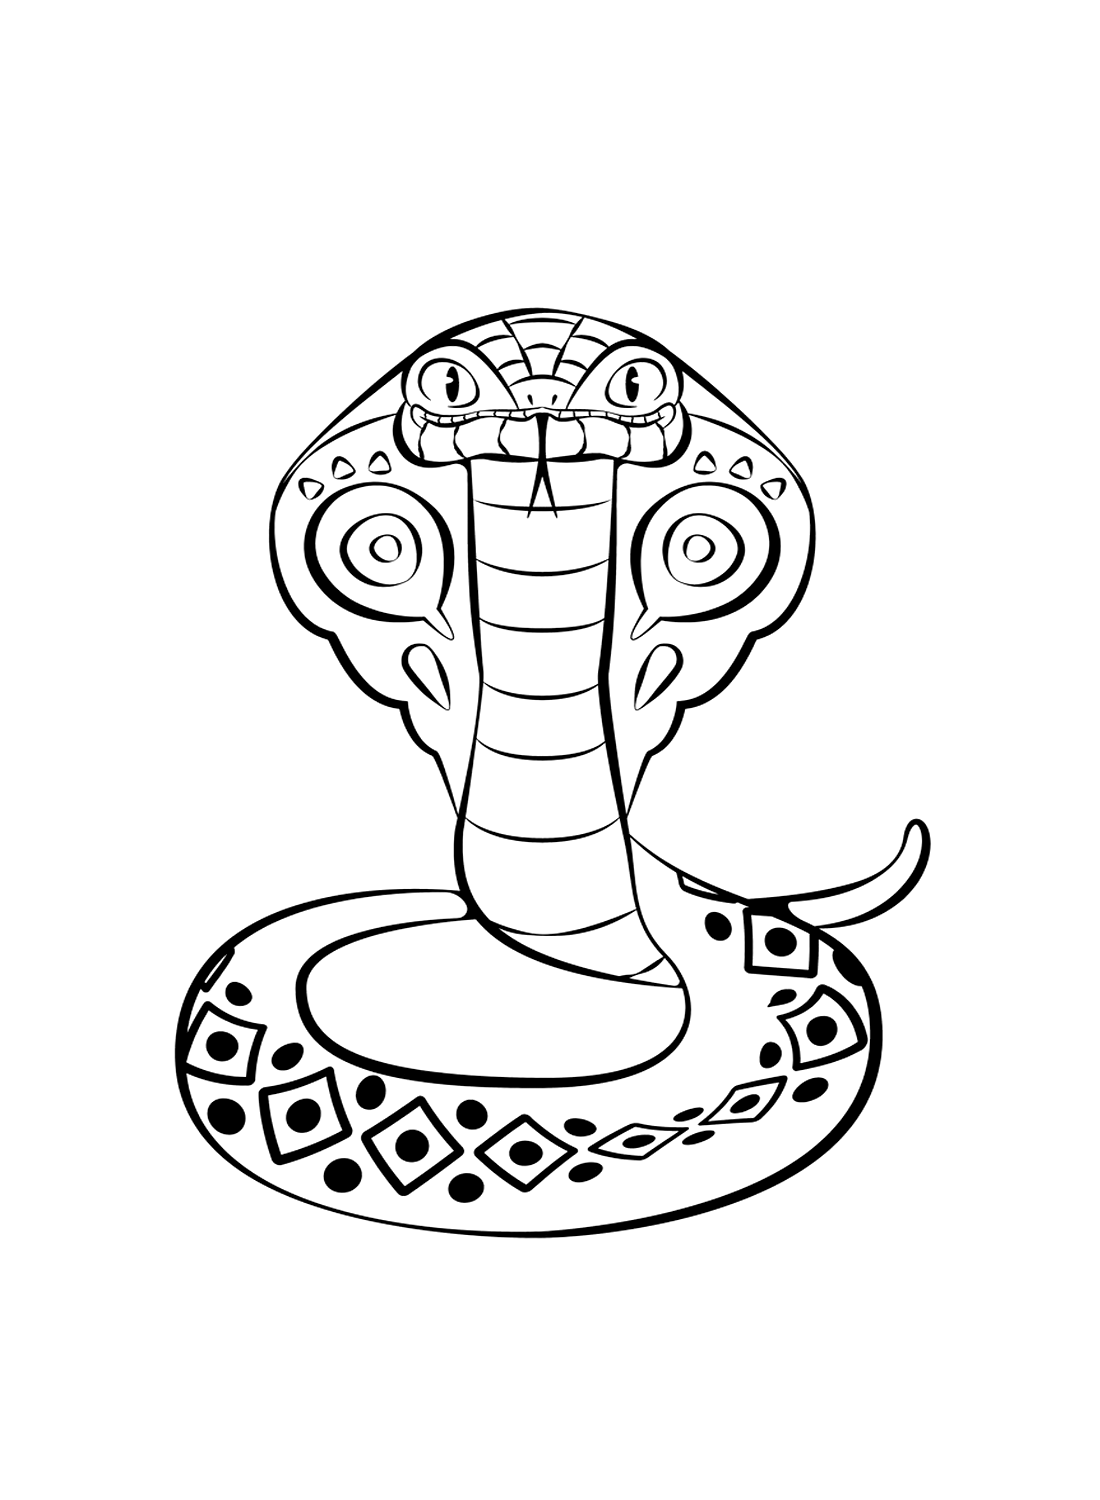 Rei Cobra from Cobra